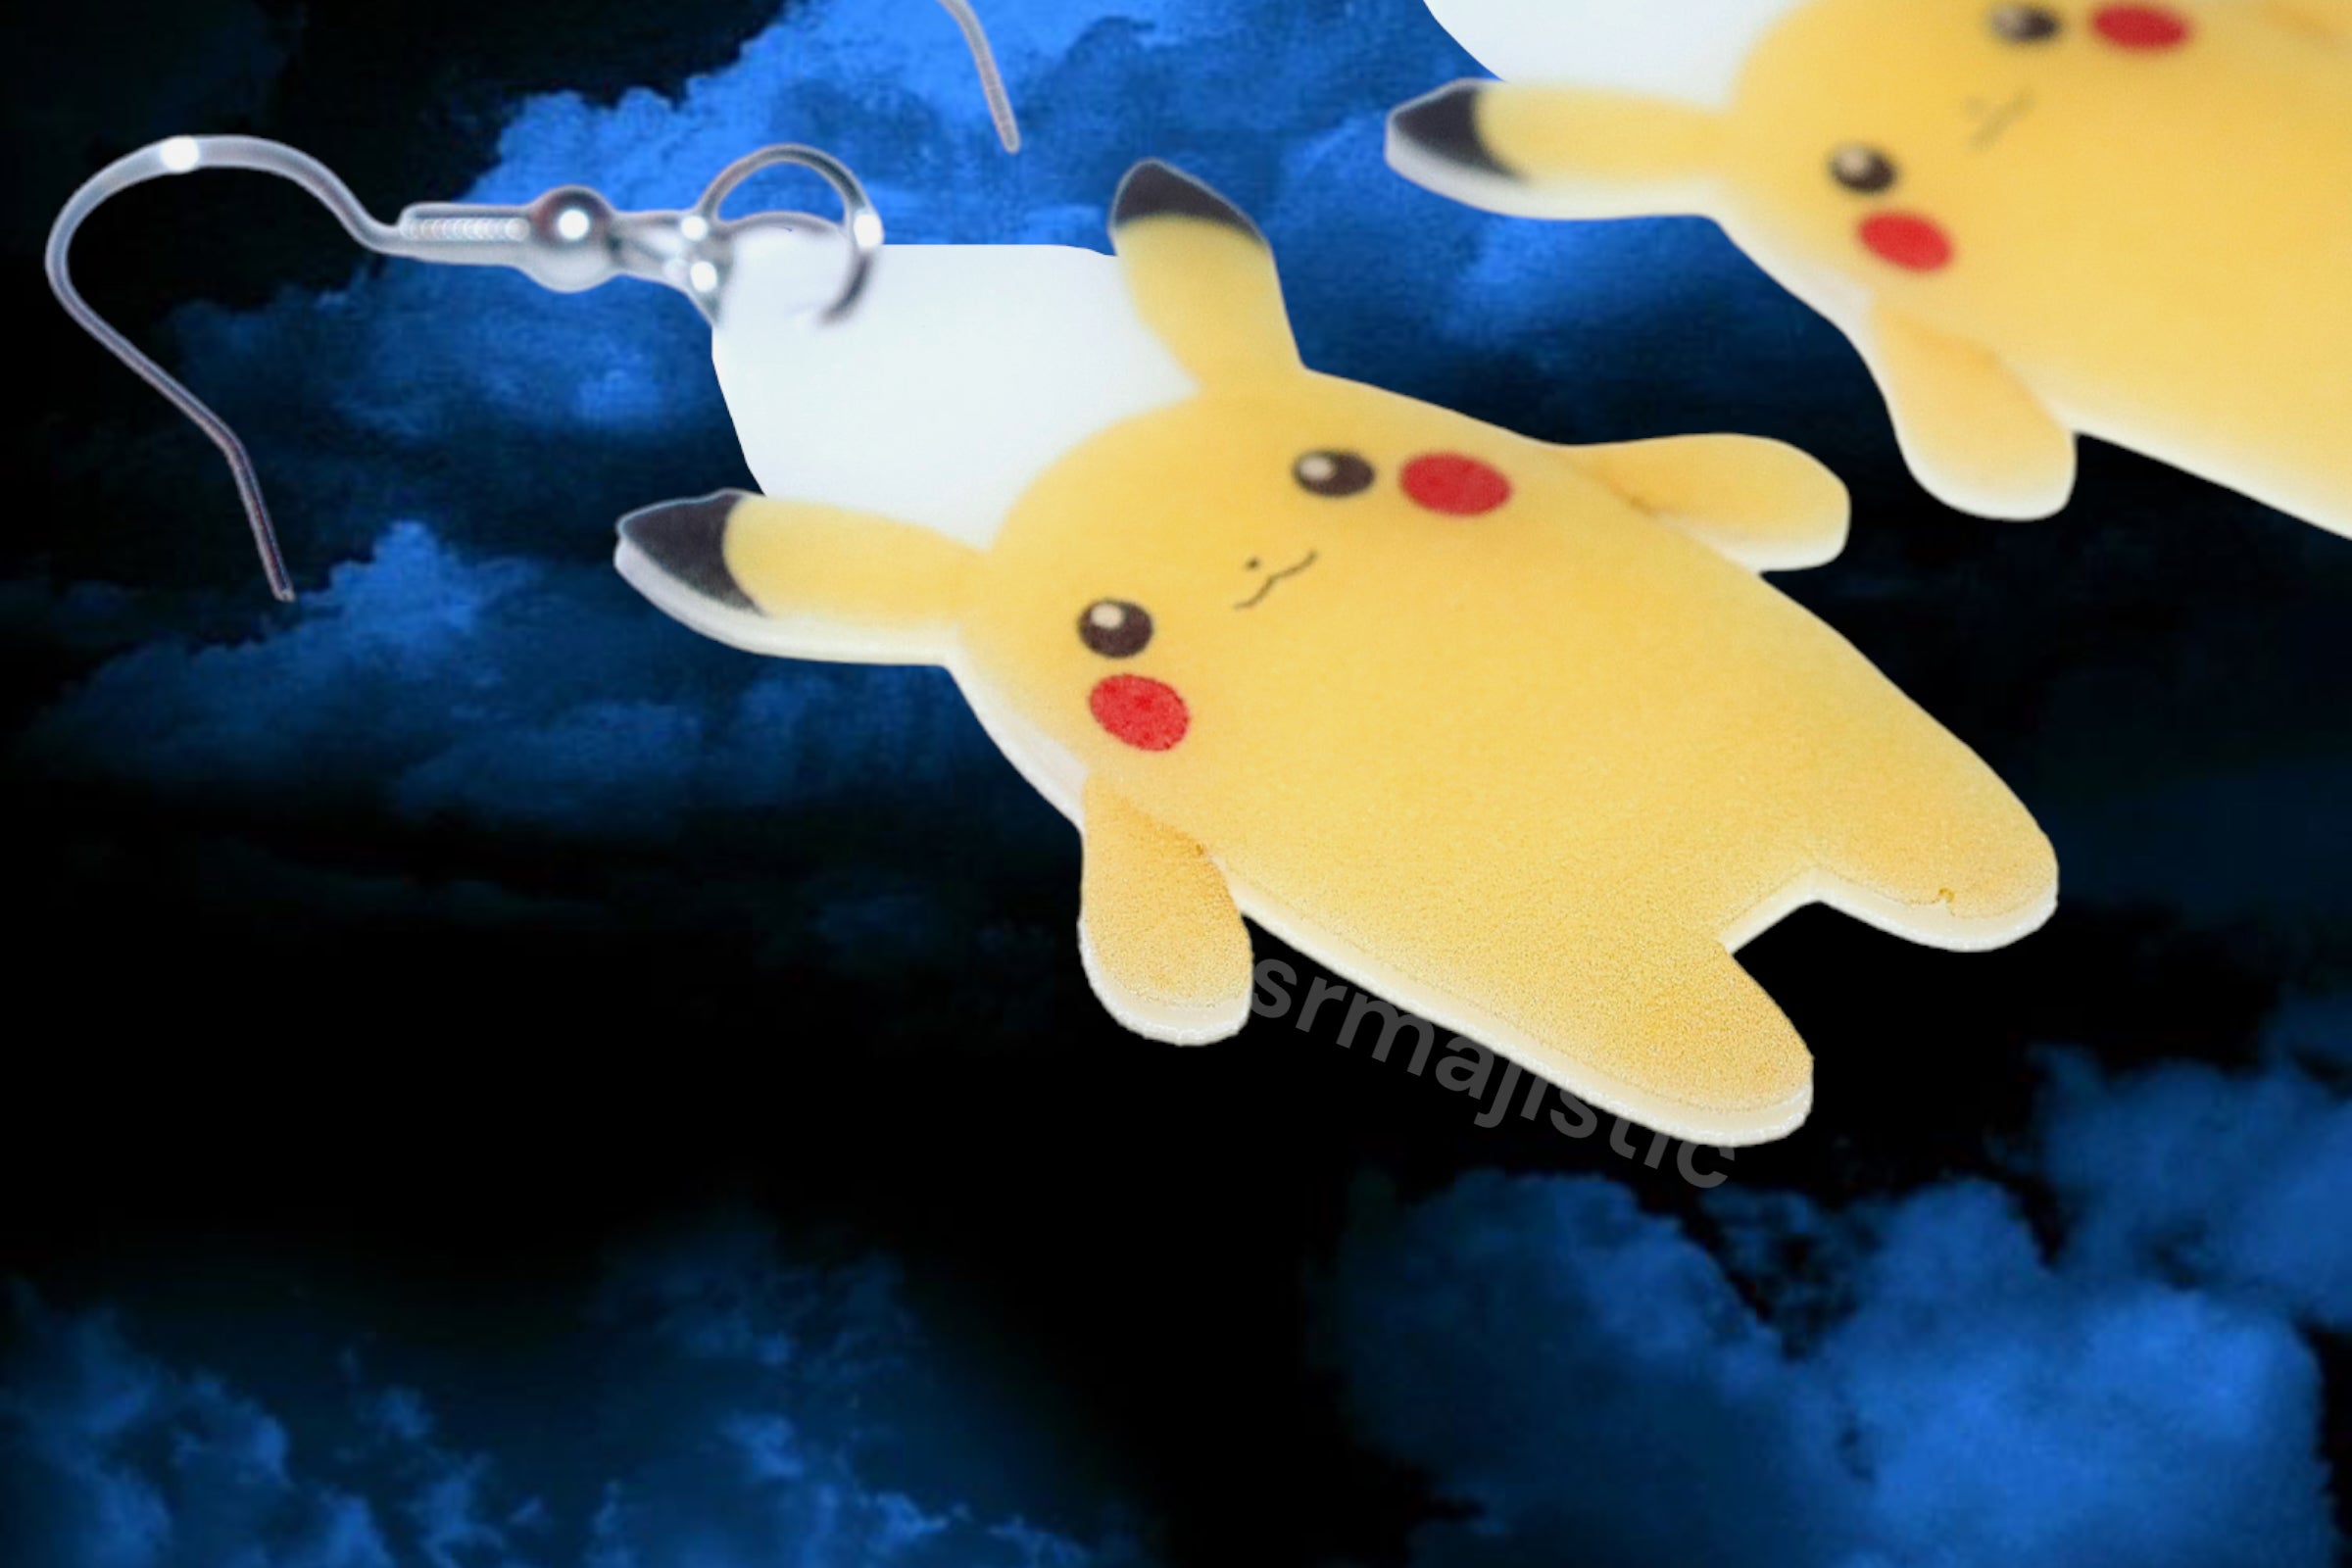 Long Pikachu Cursed Funny Pokémon Character Handmade Earrings!